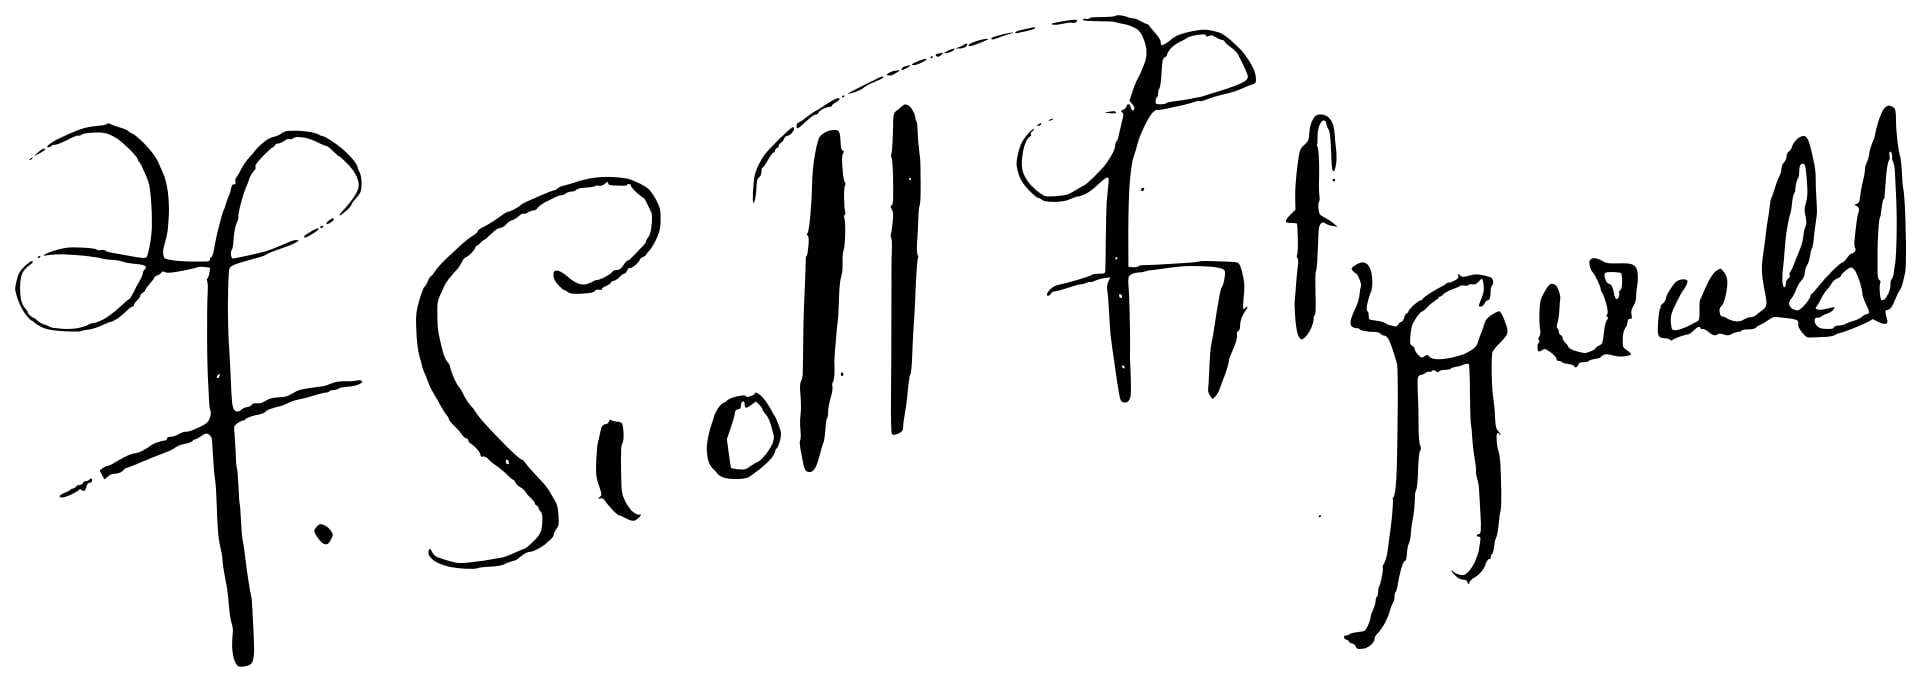 F. Scott Fitzgerald Signature